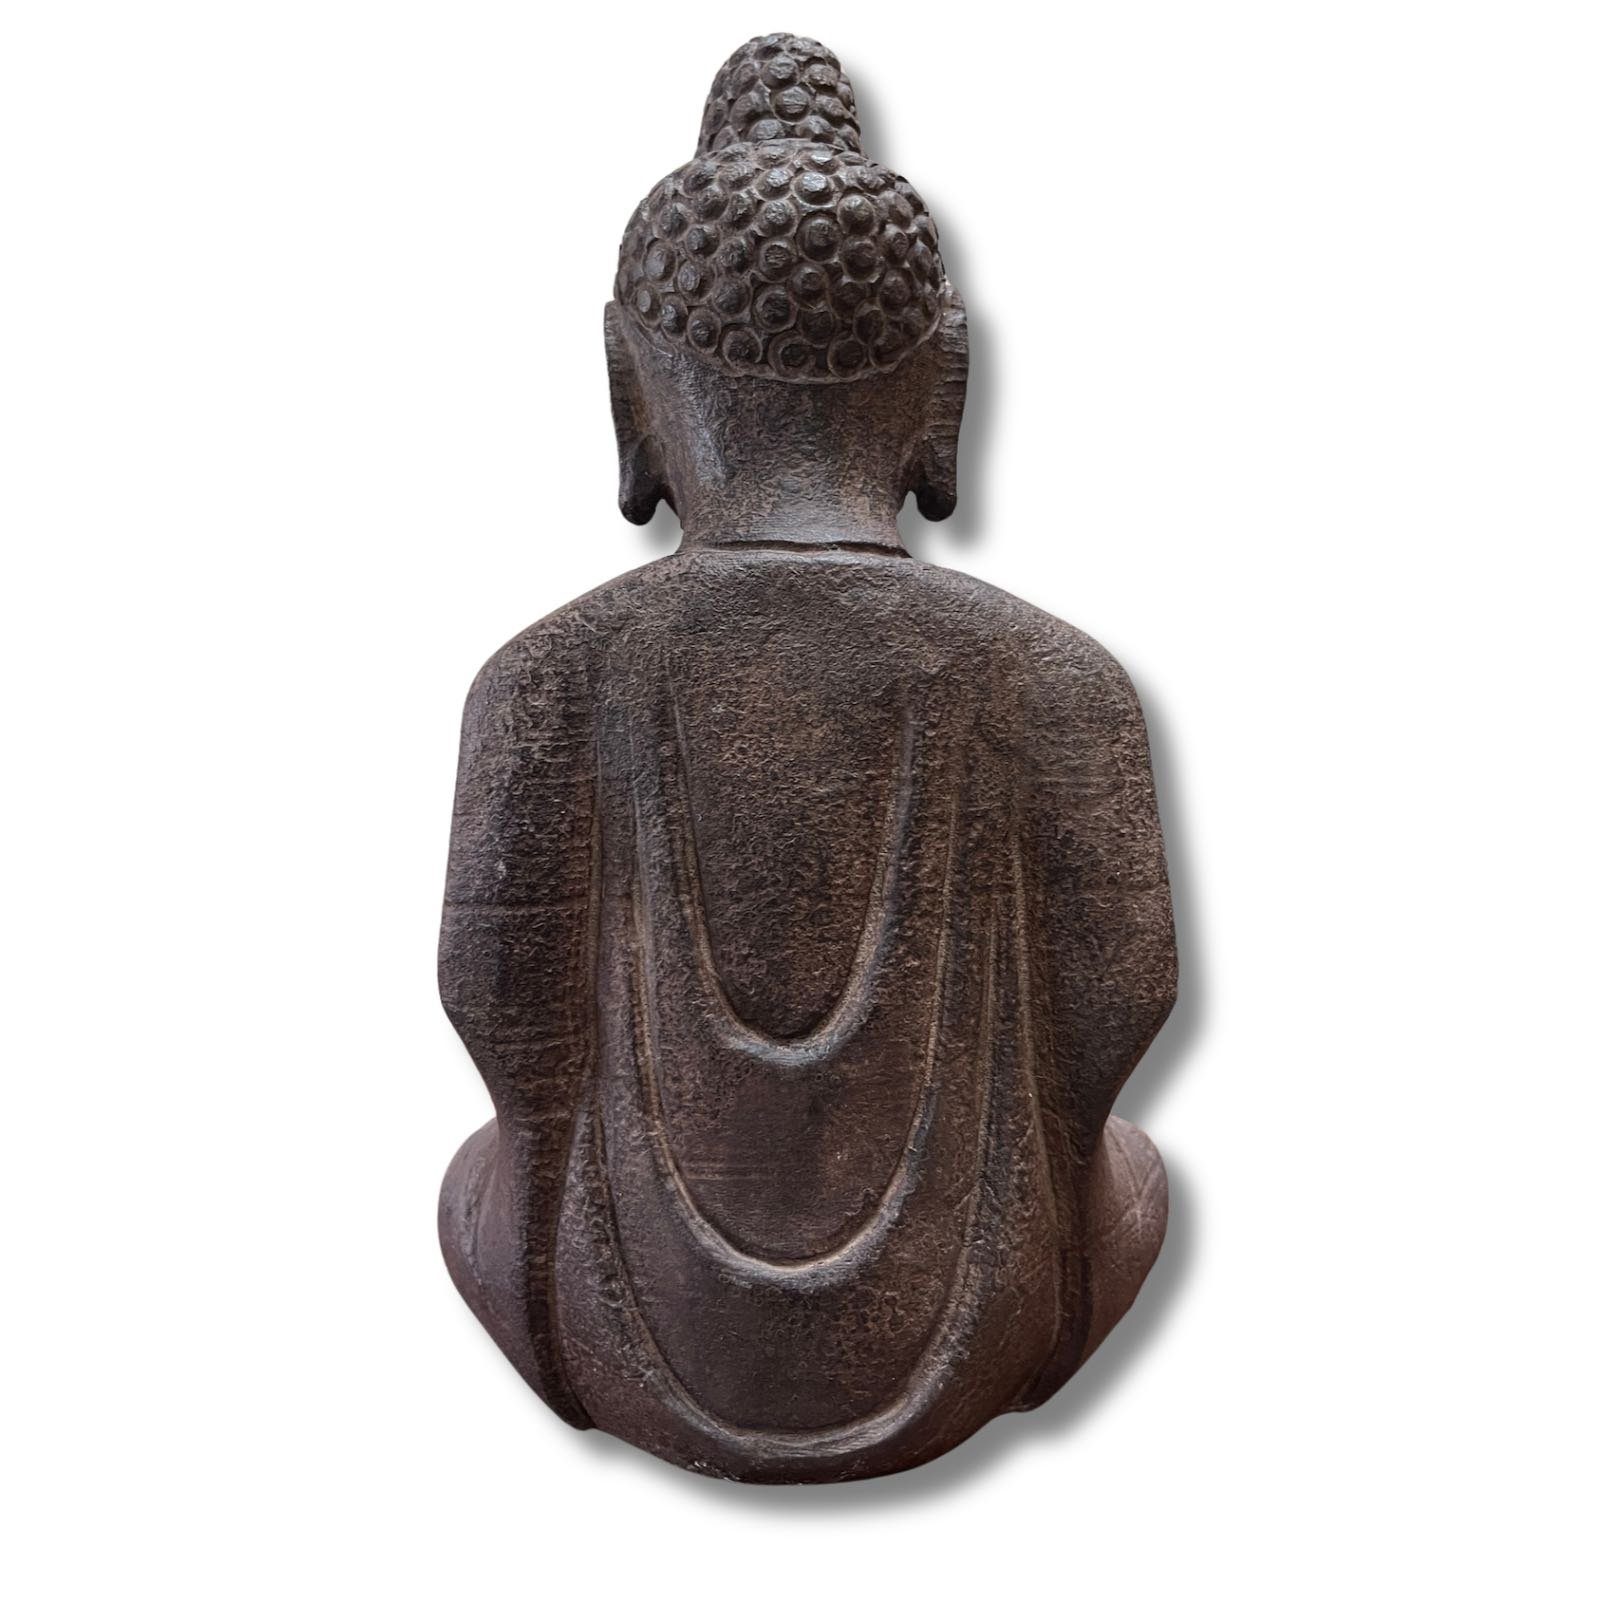 Buddhafigur Figur Buddha Asien Naturstein LifeStyle China groß 36cm Garten Meditation Tibet